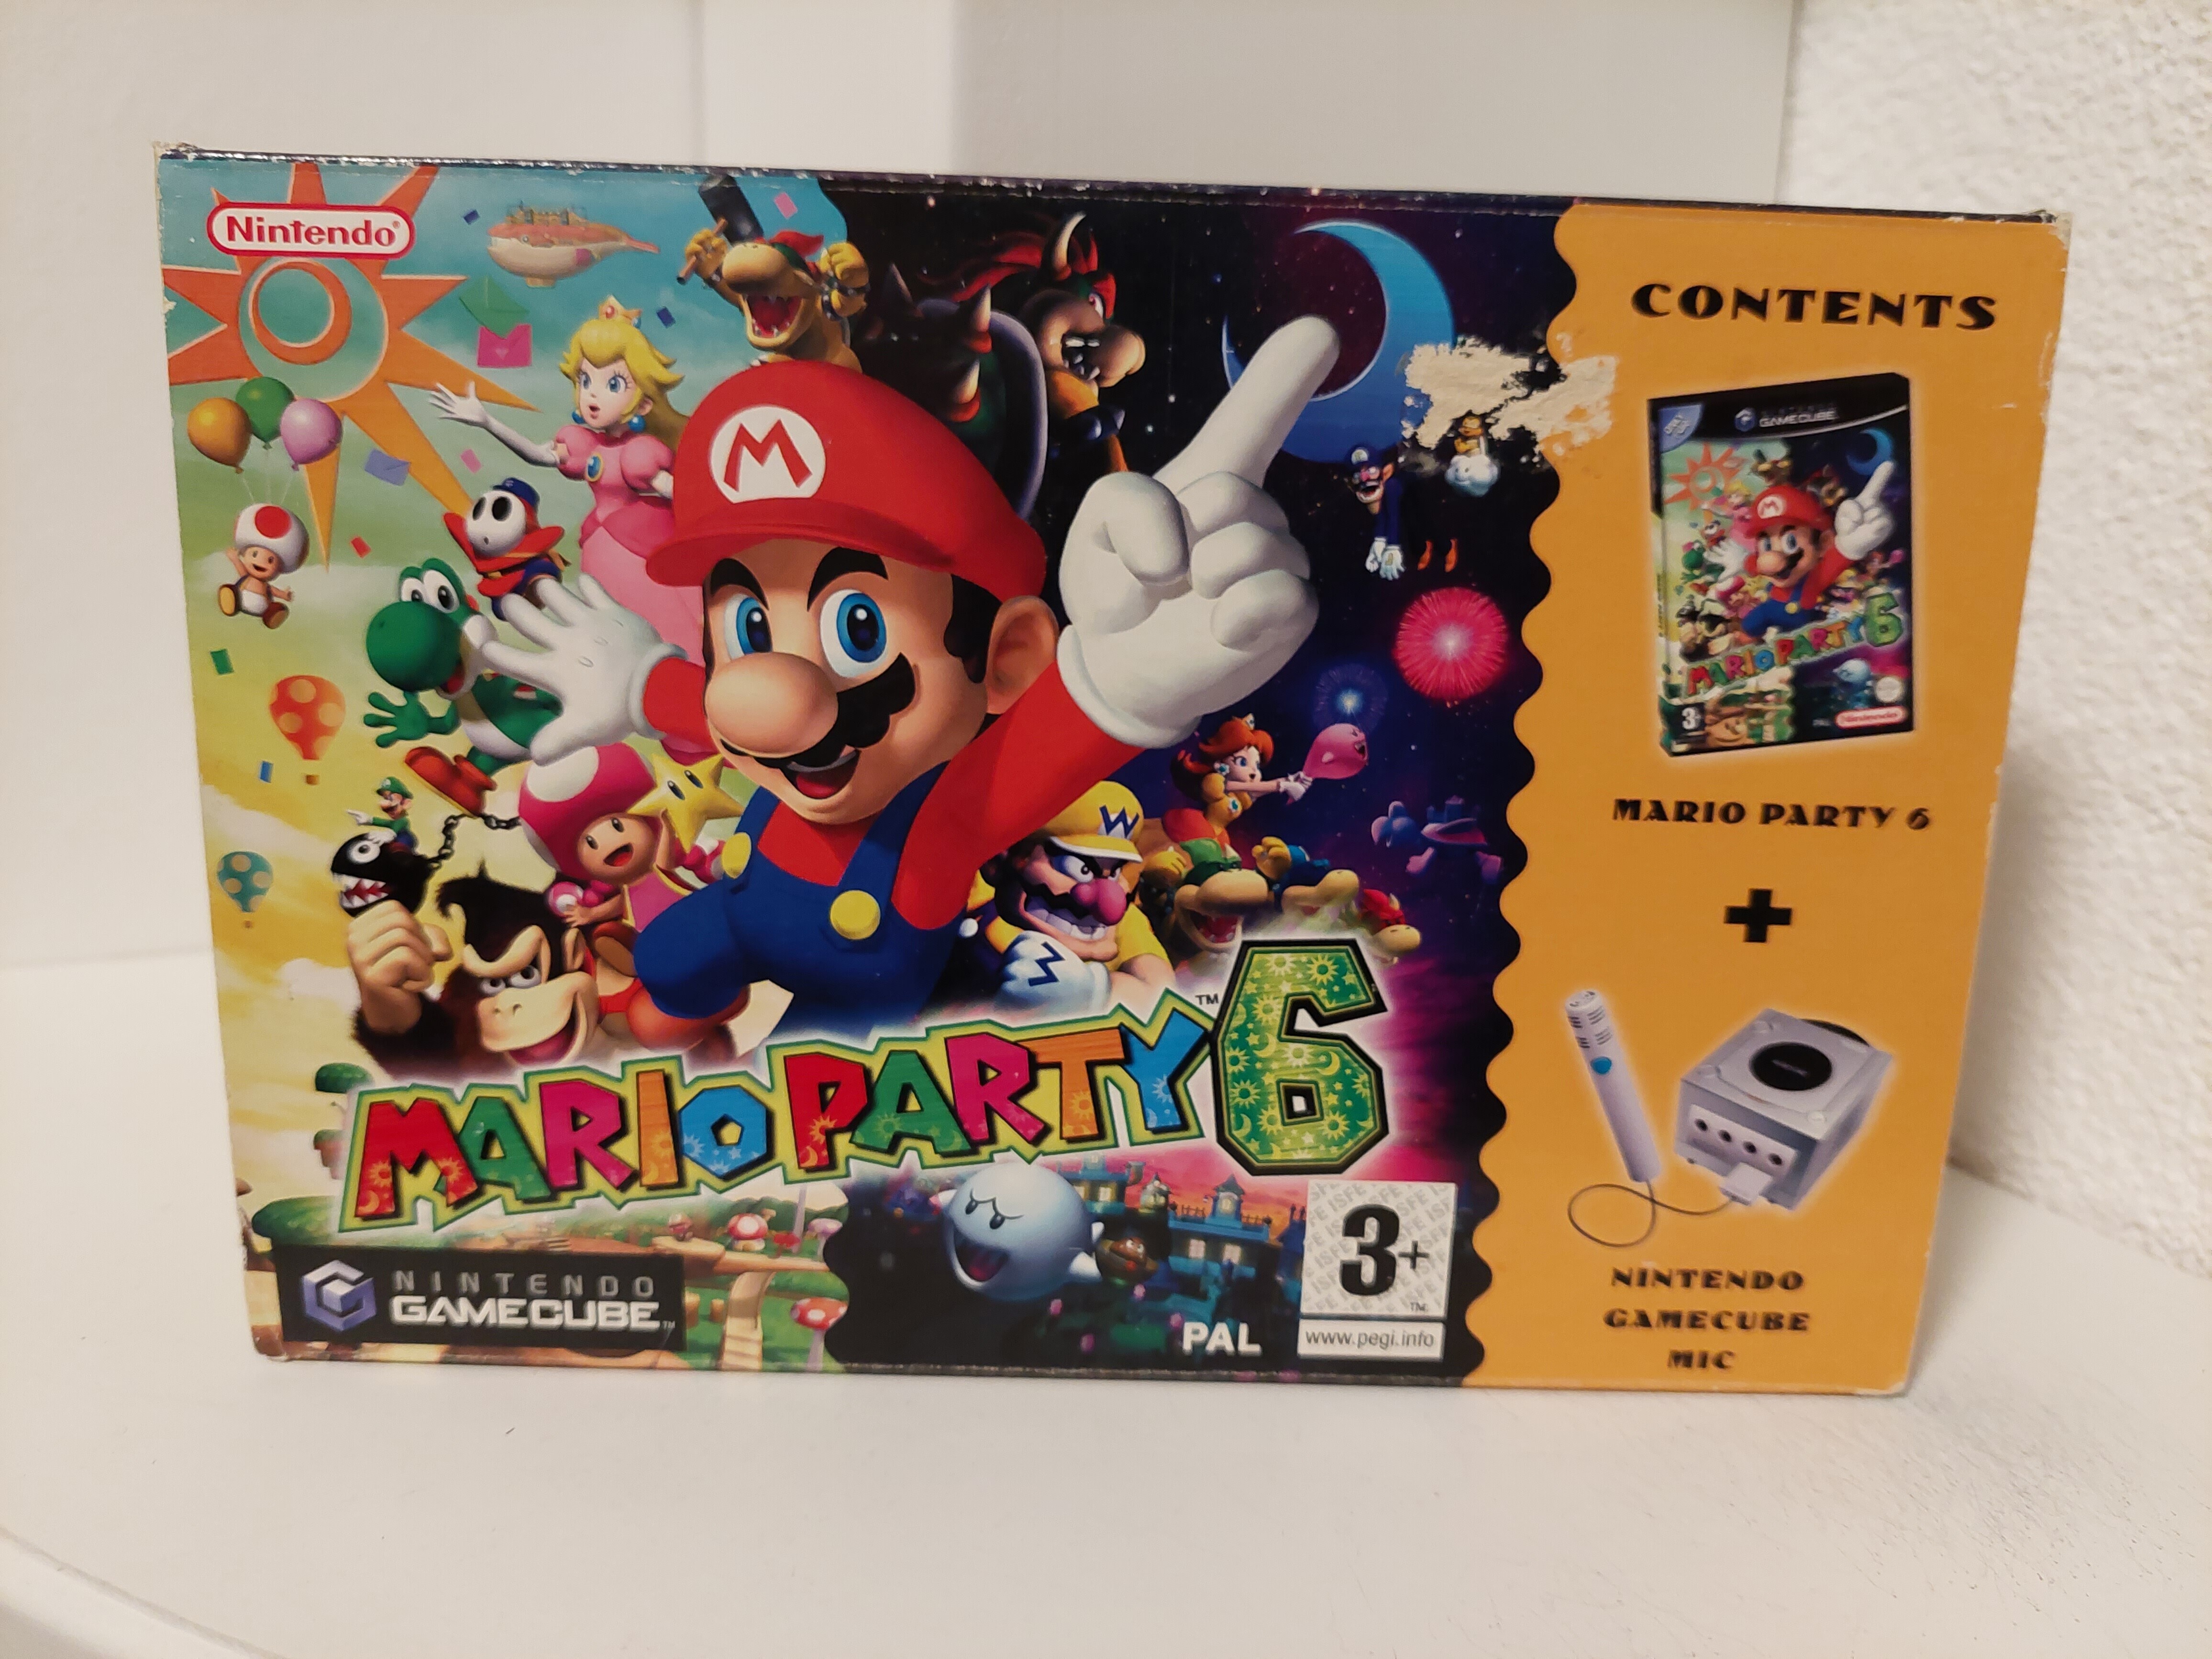  Nintendo GameCube Mario Party 6 Microphone Bundle